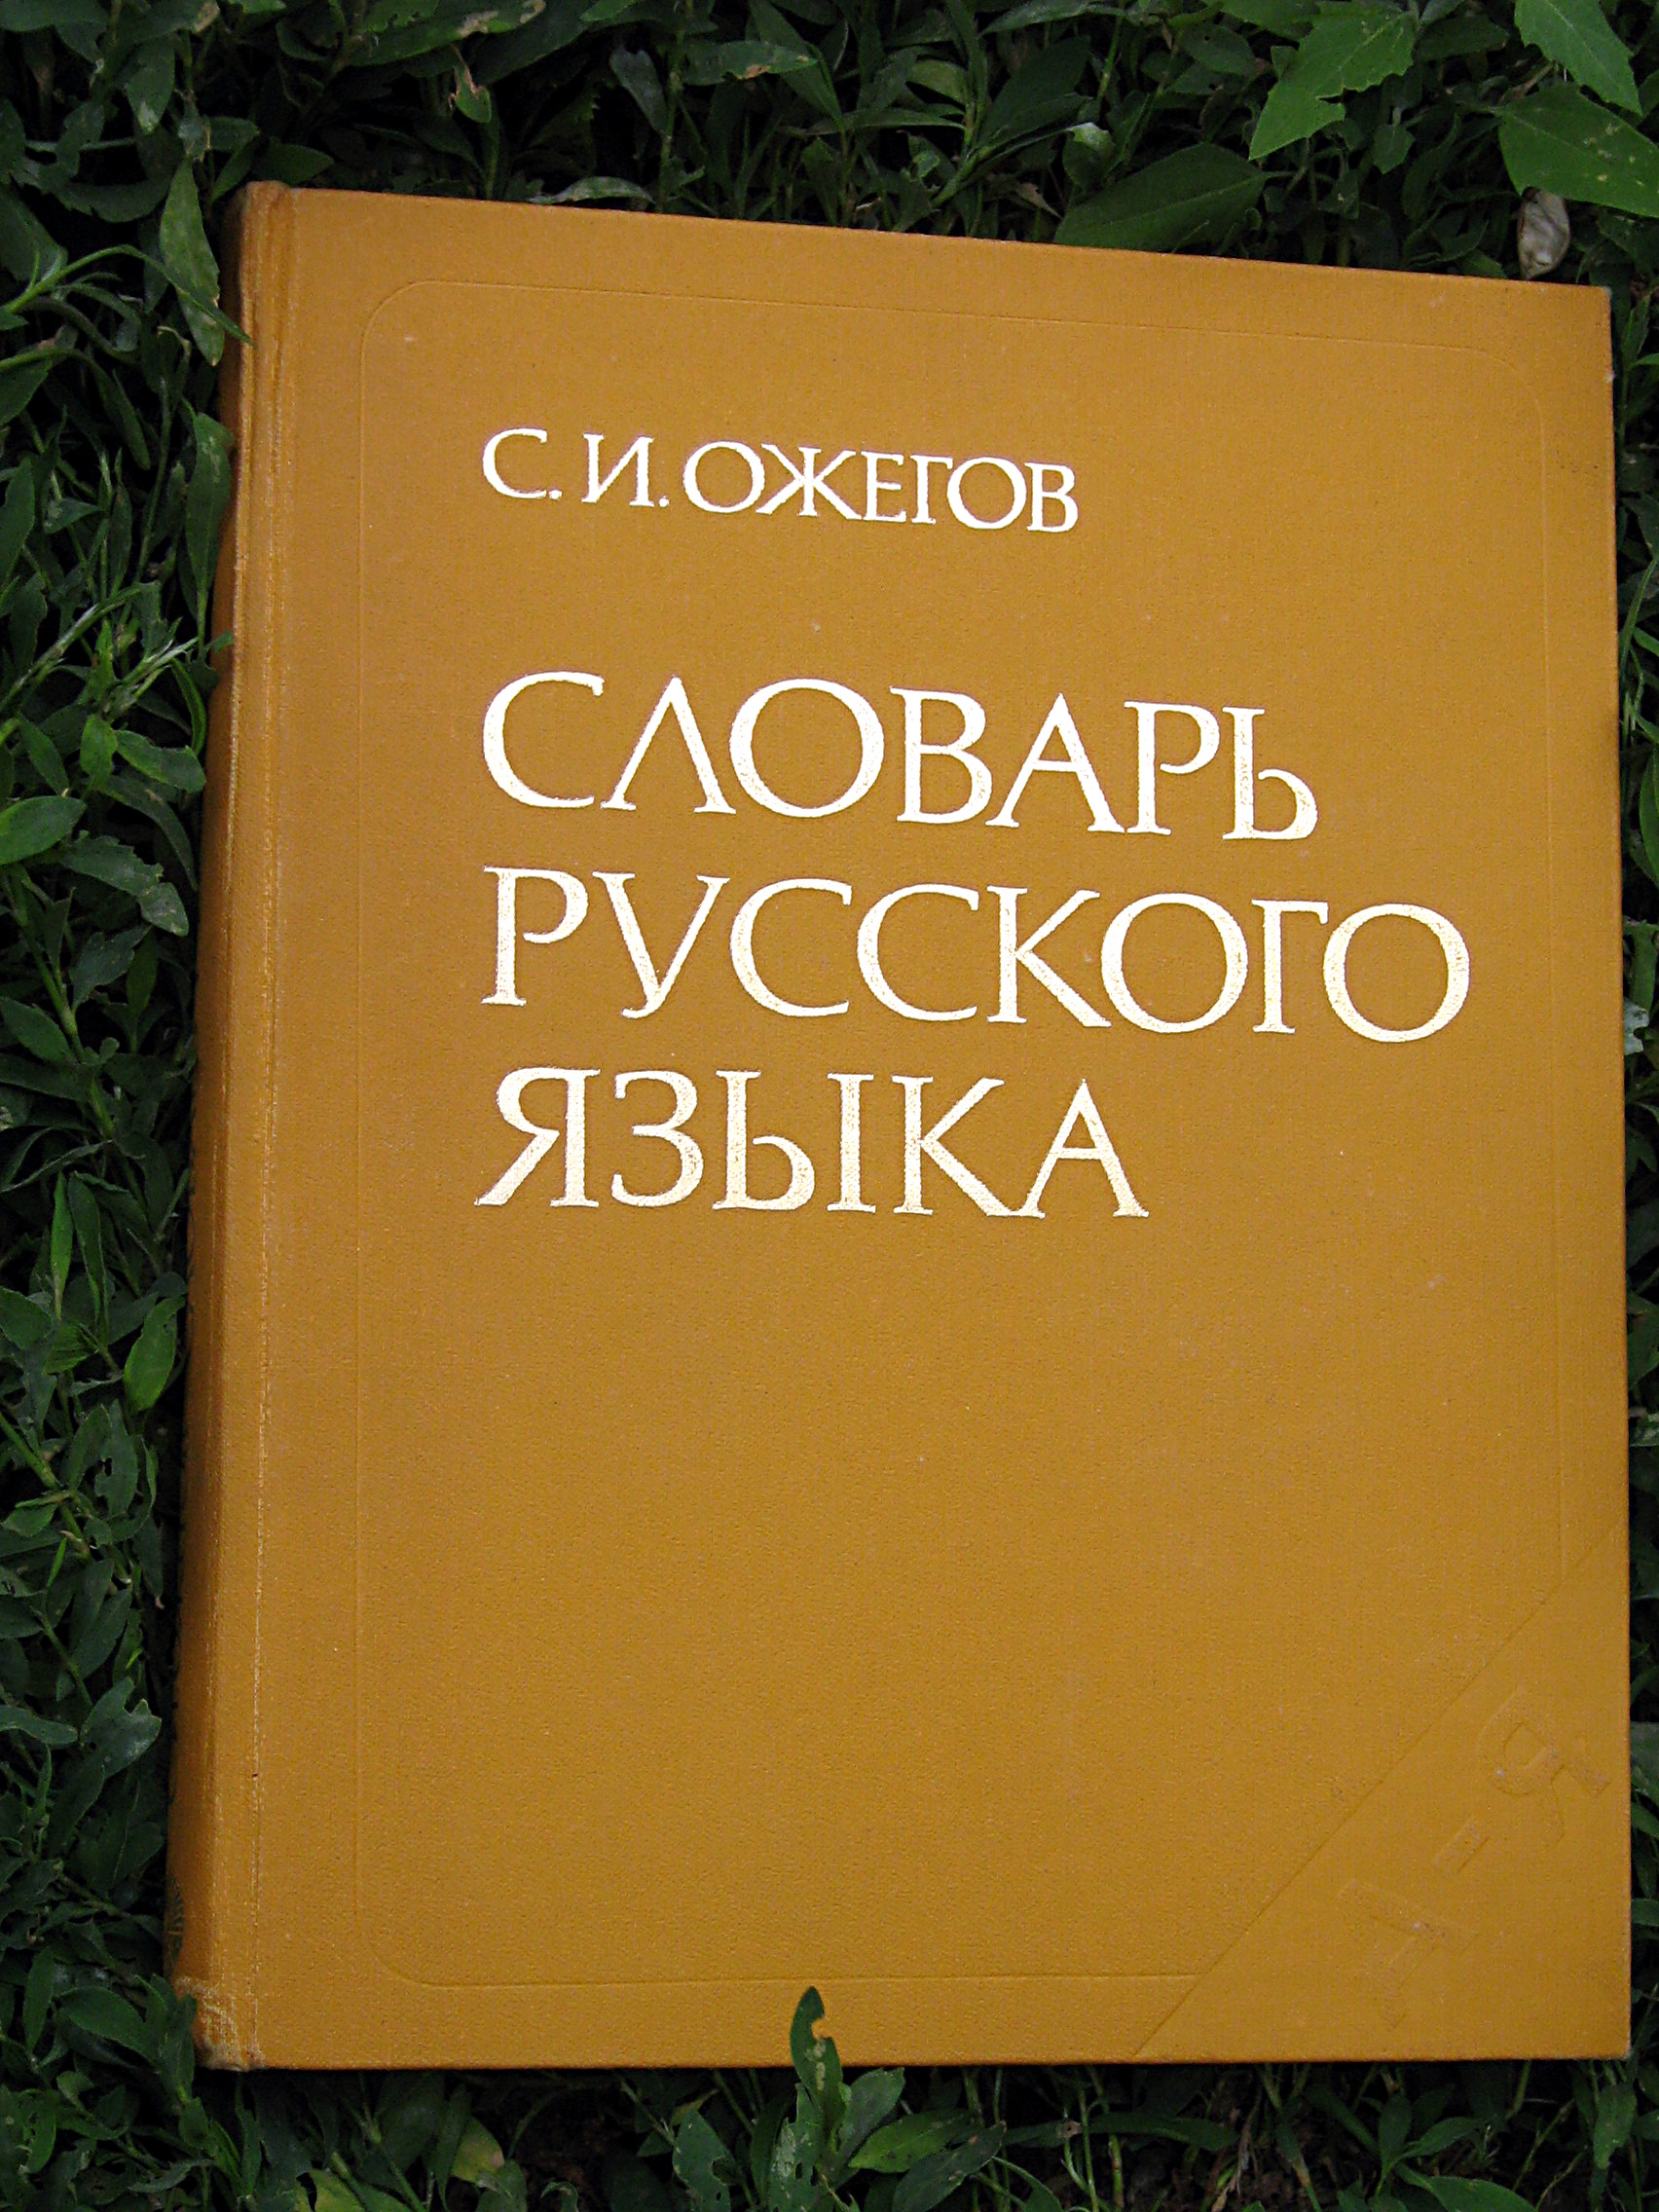 Russian_dictionary.jpg